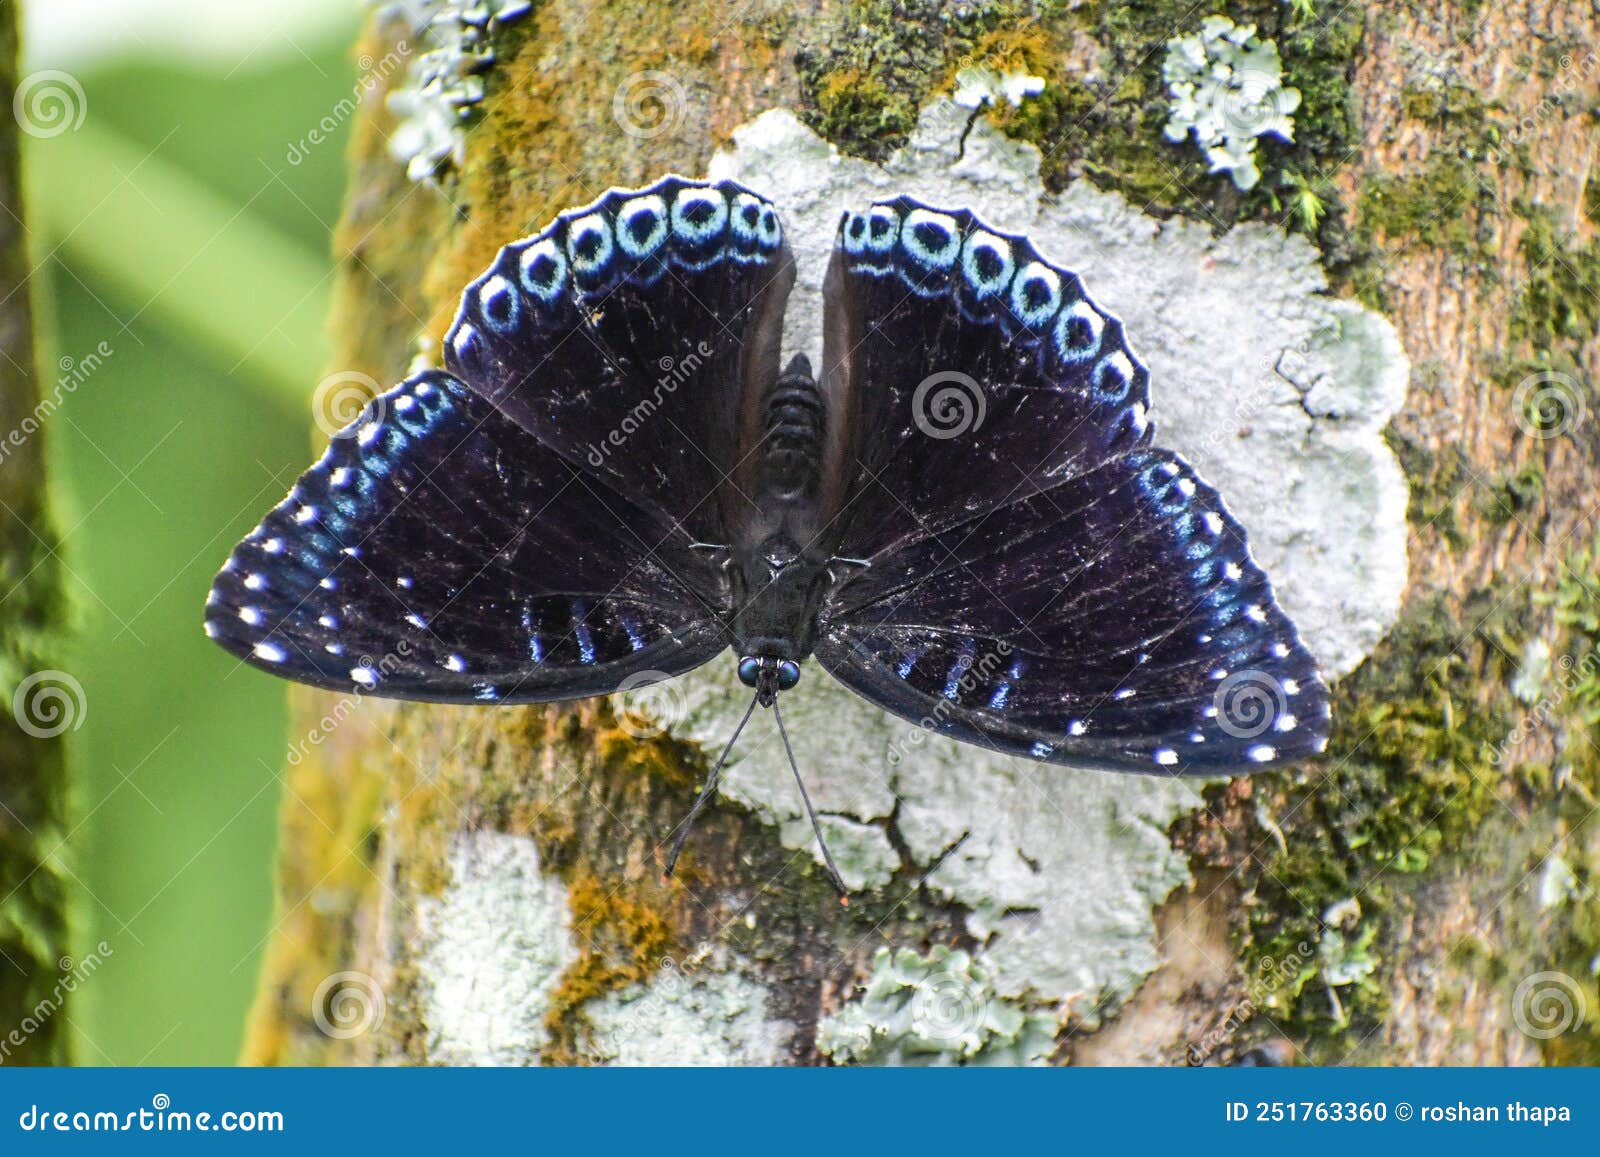 stibochiona nicea - popinjay butterfly